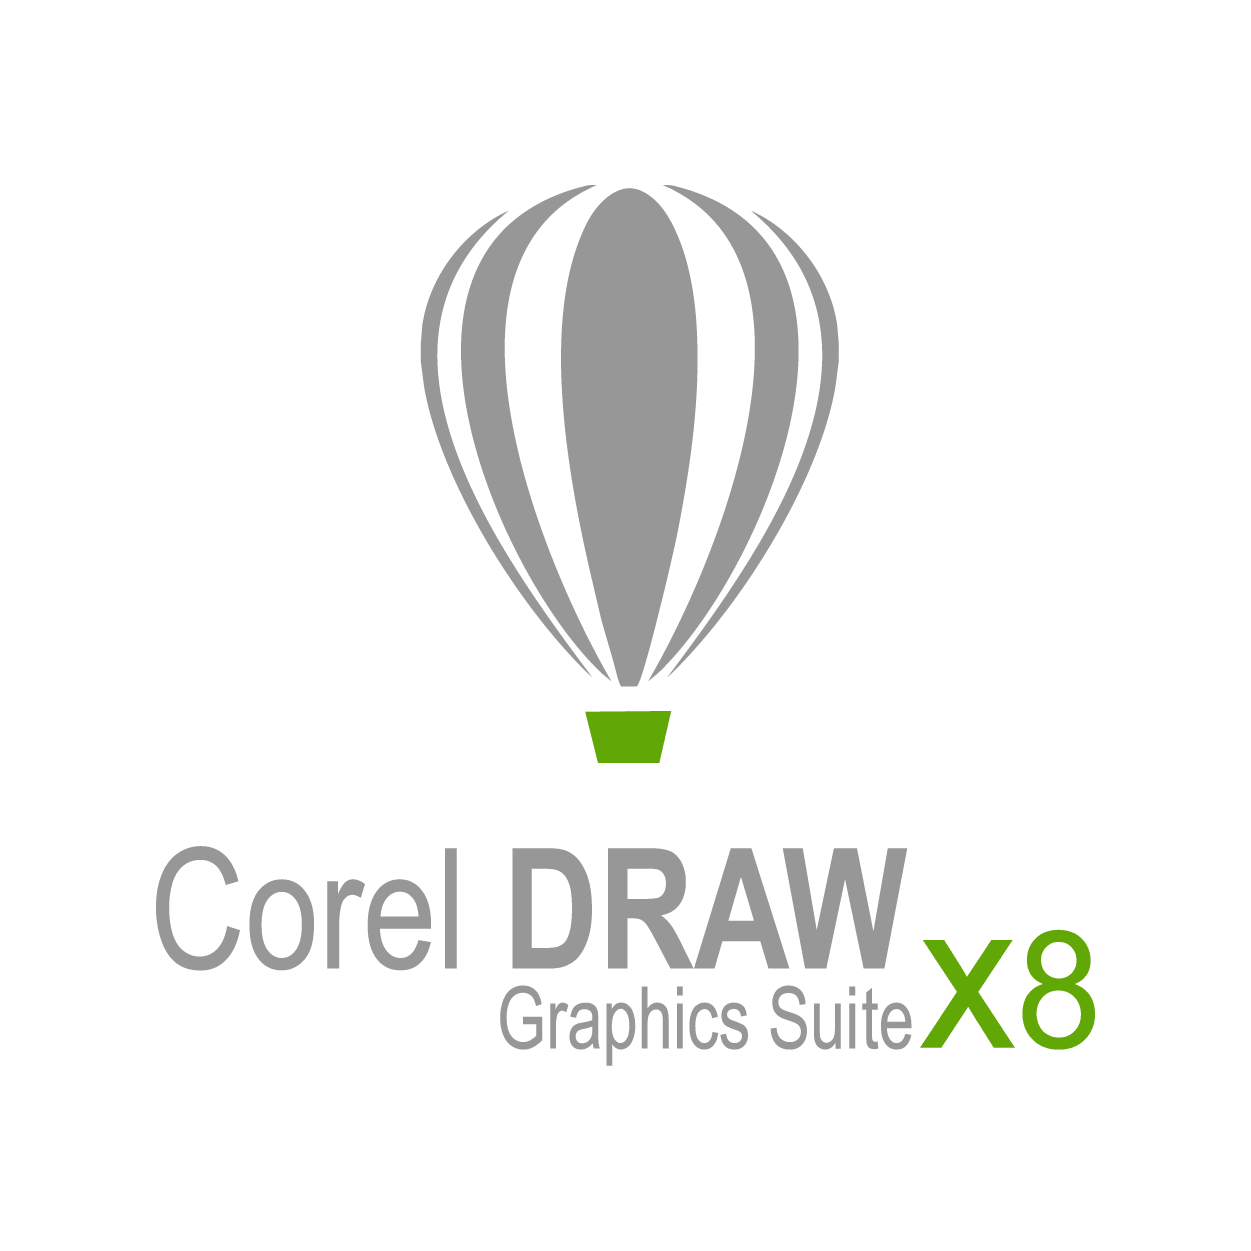 Corel Draw Logo